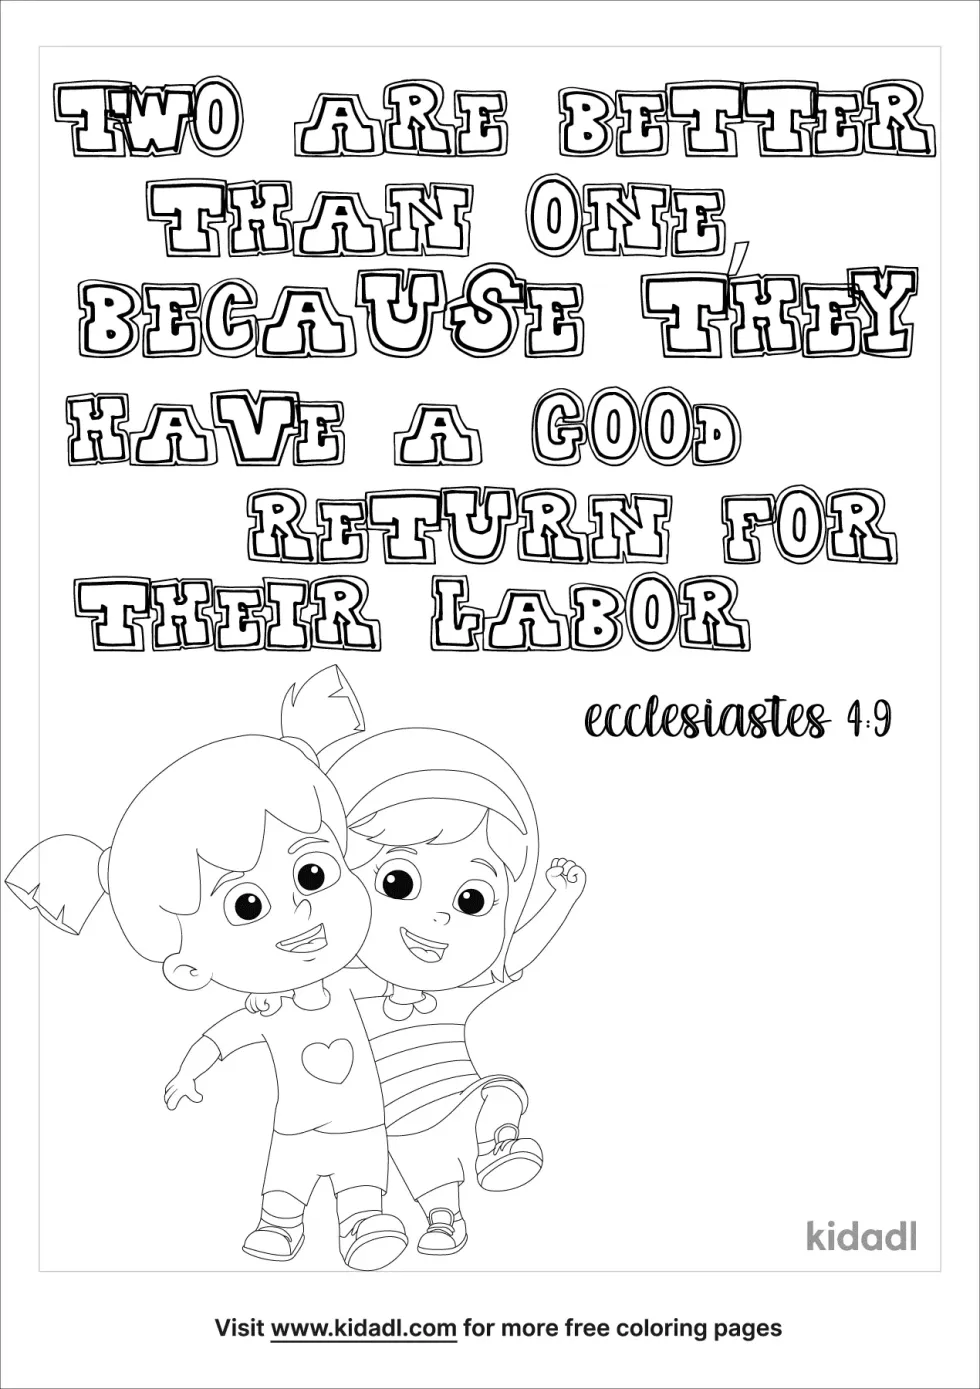 Ecclesiastes 4:9 Coloring Page